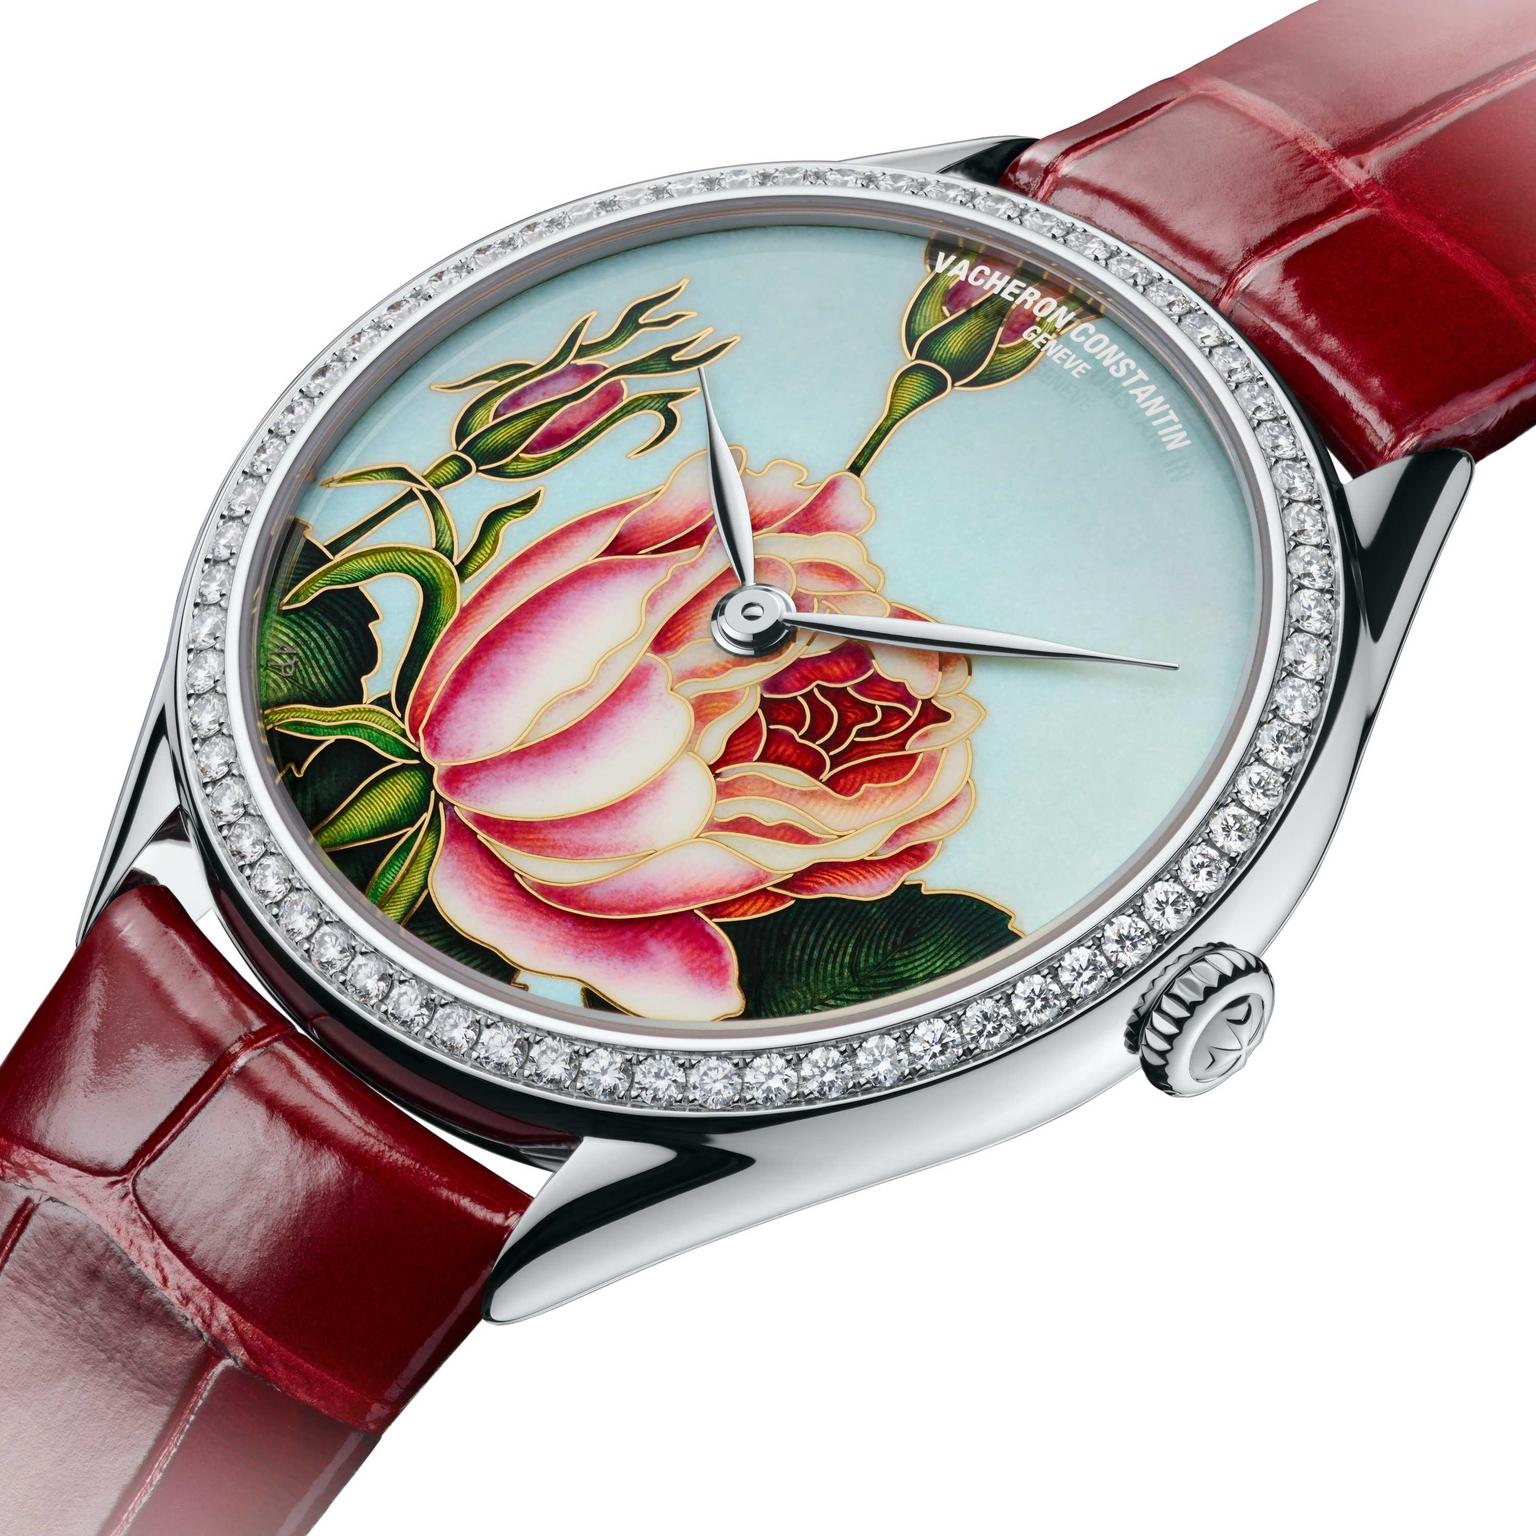 Vacheron Constantin Florilège Rose Centifolia watch